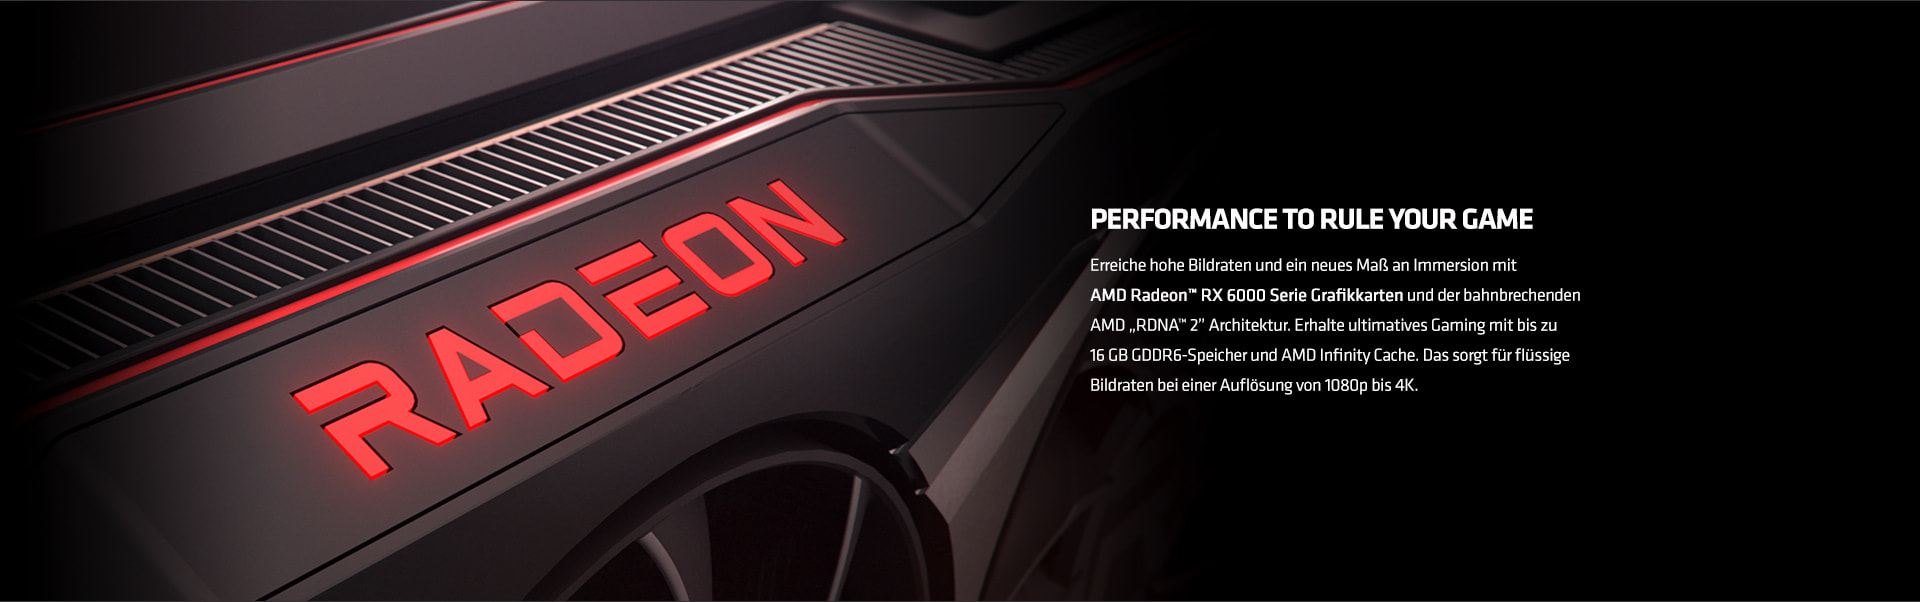 AMD Radeon RX 6000 Serie Grafikkarten Performance